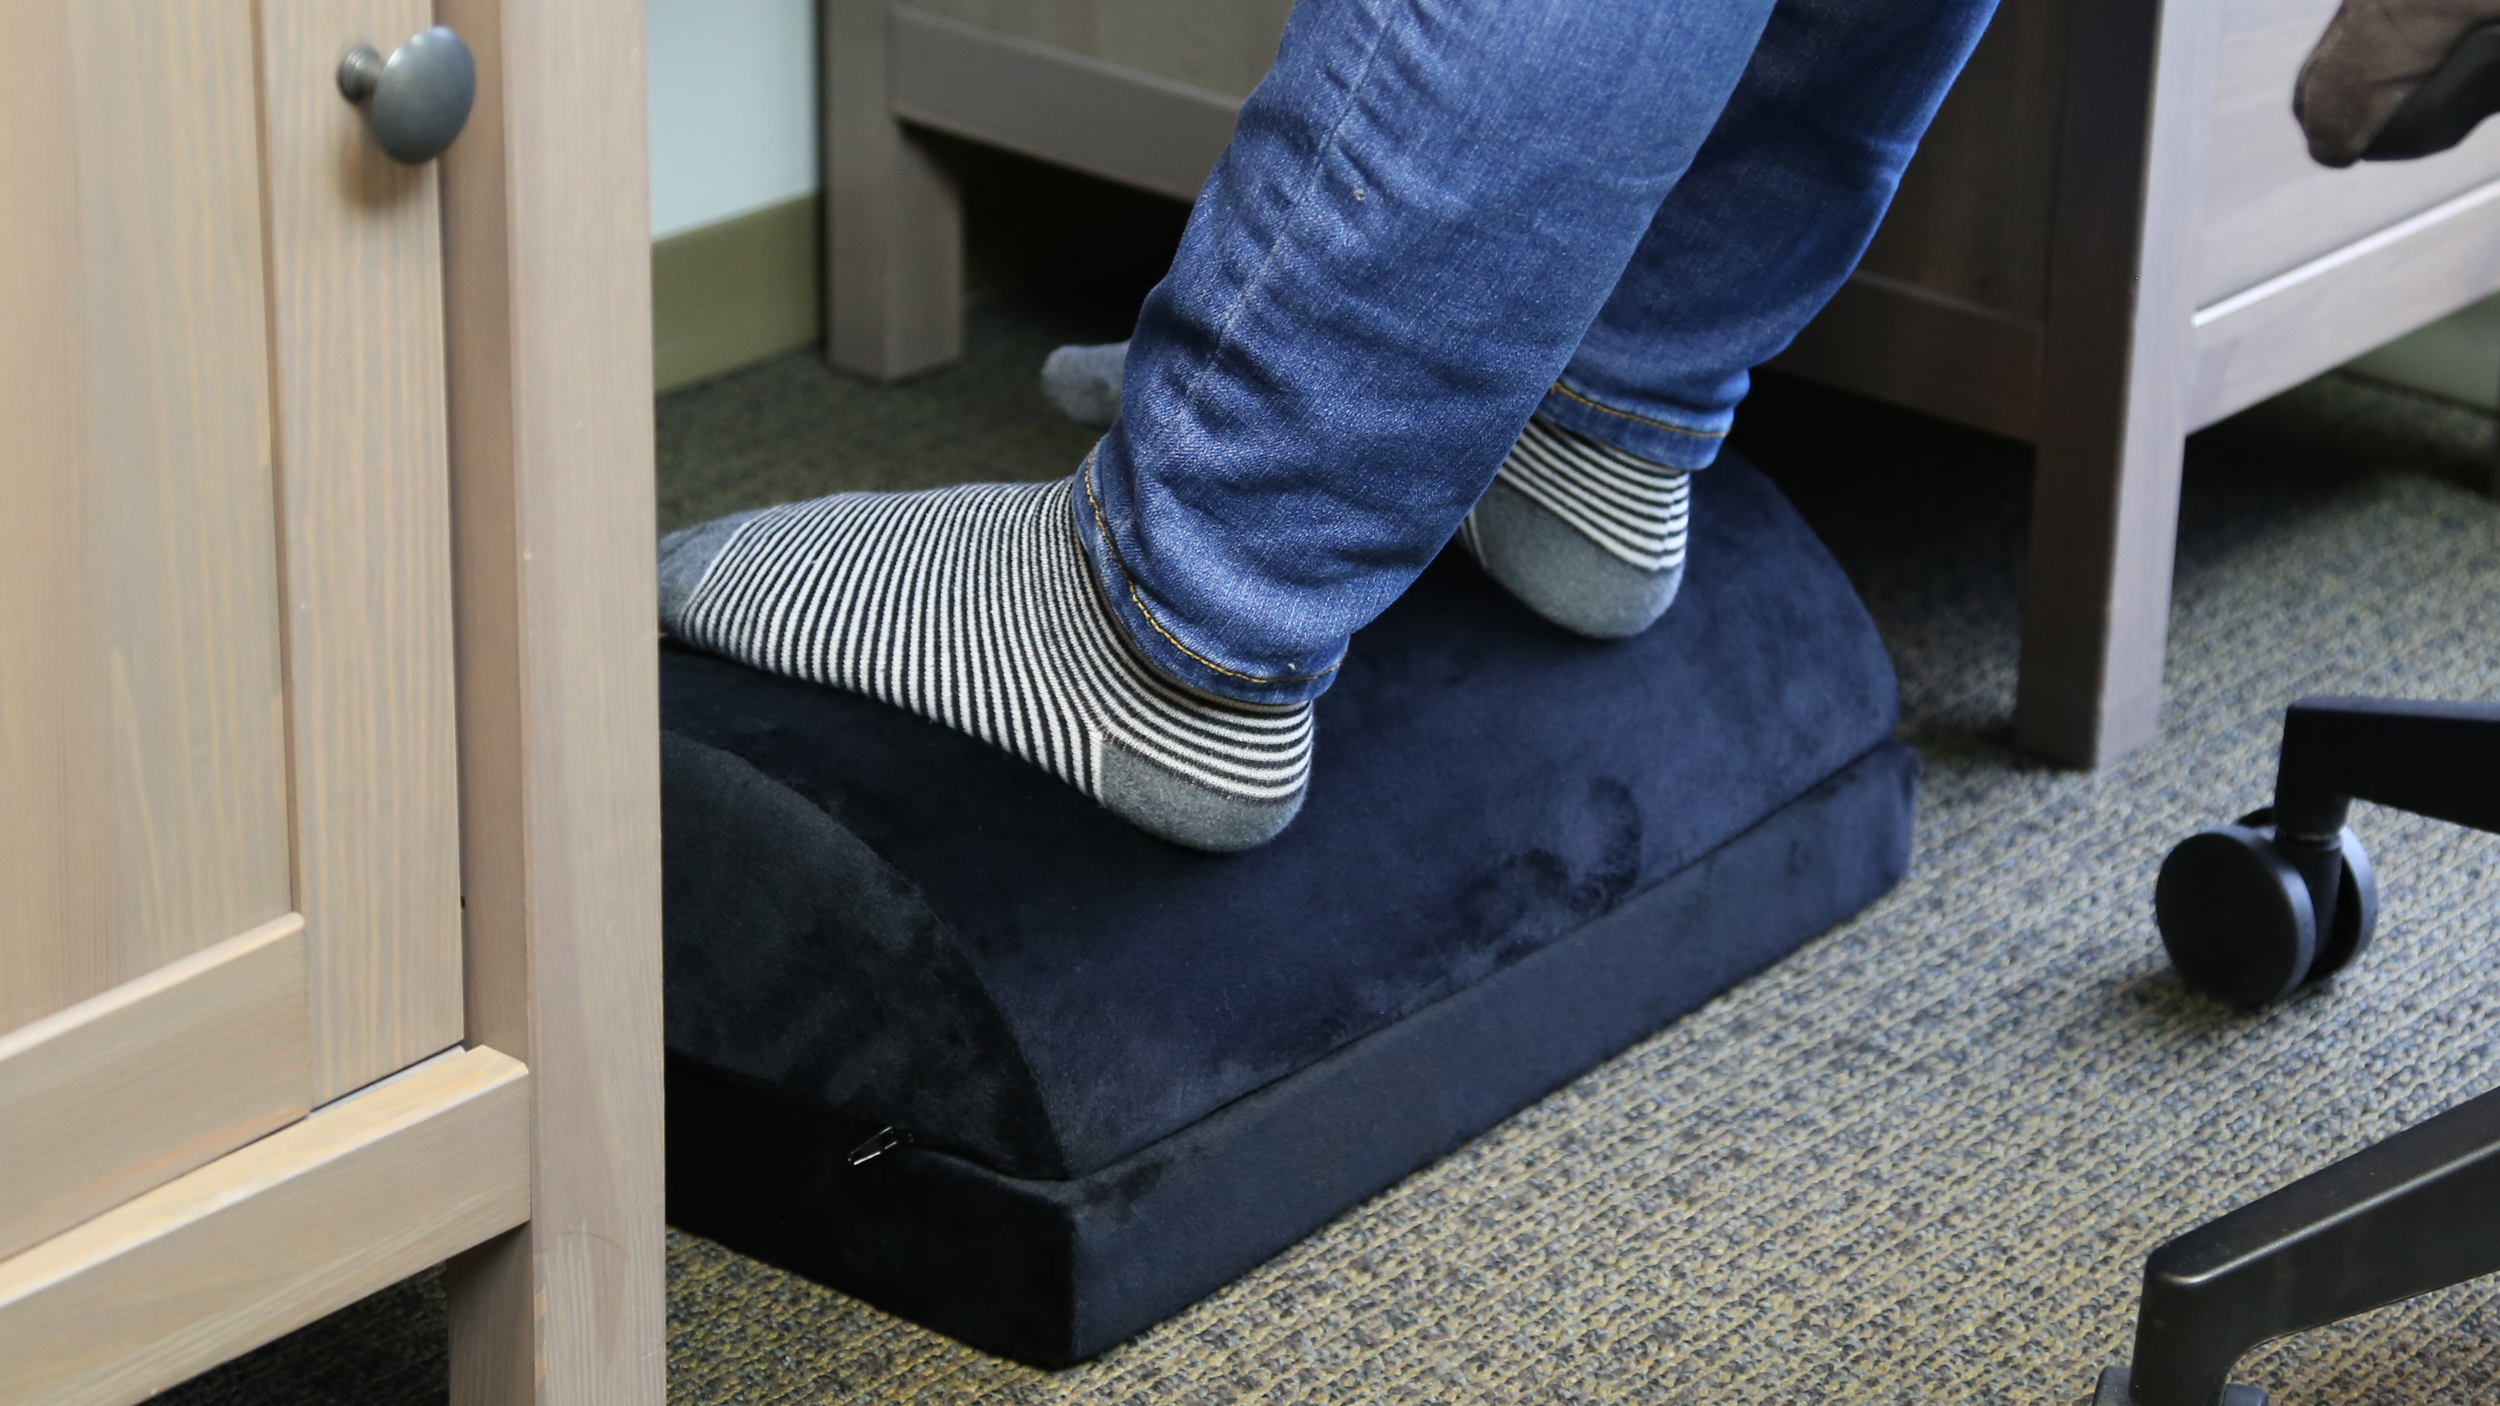 NWD!!ComfiLife Foot Rest for Under Desk – Adjustable Black Memory Foam  Pillow